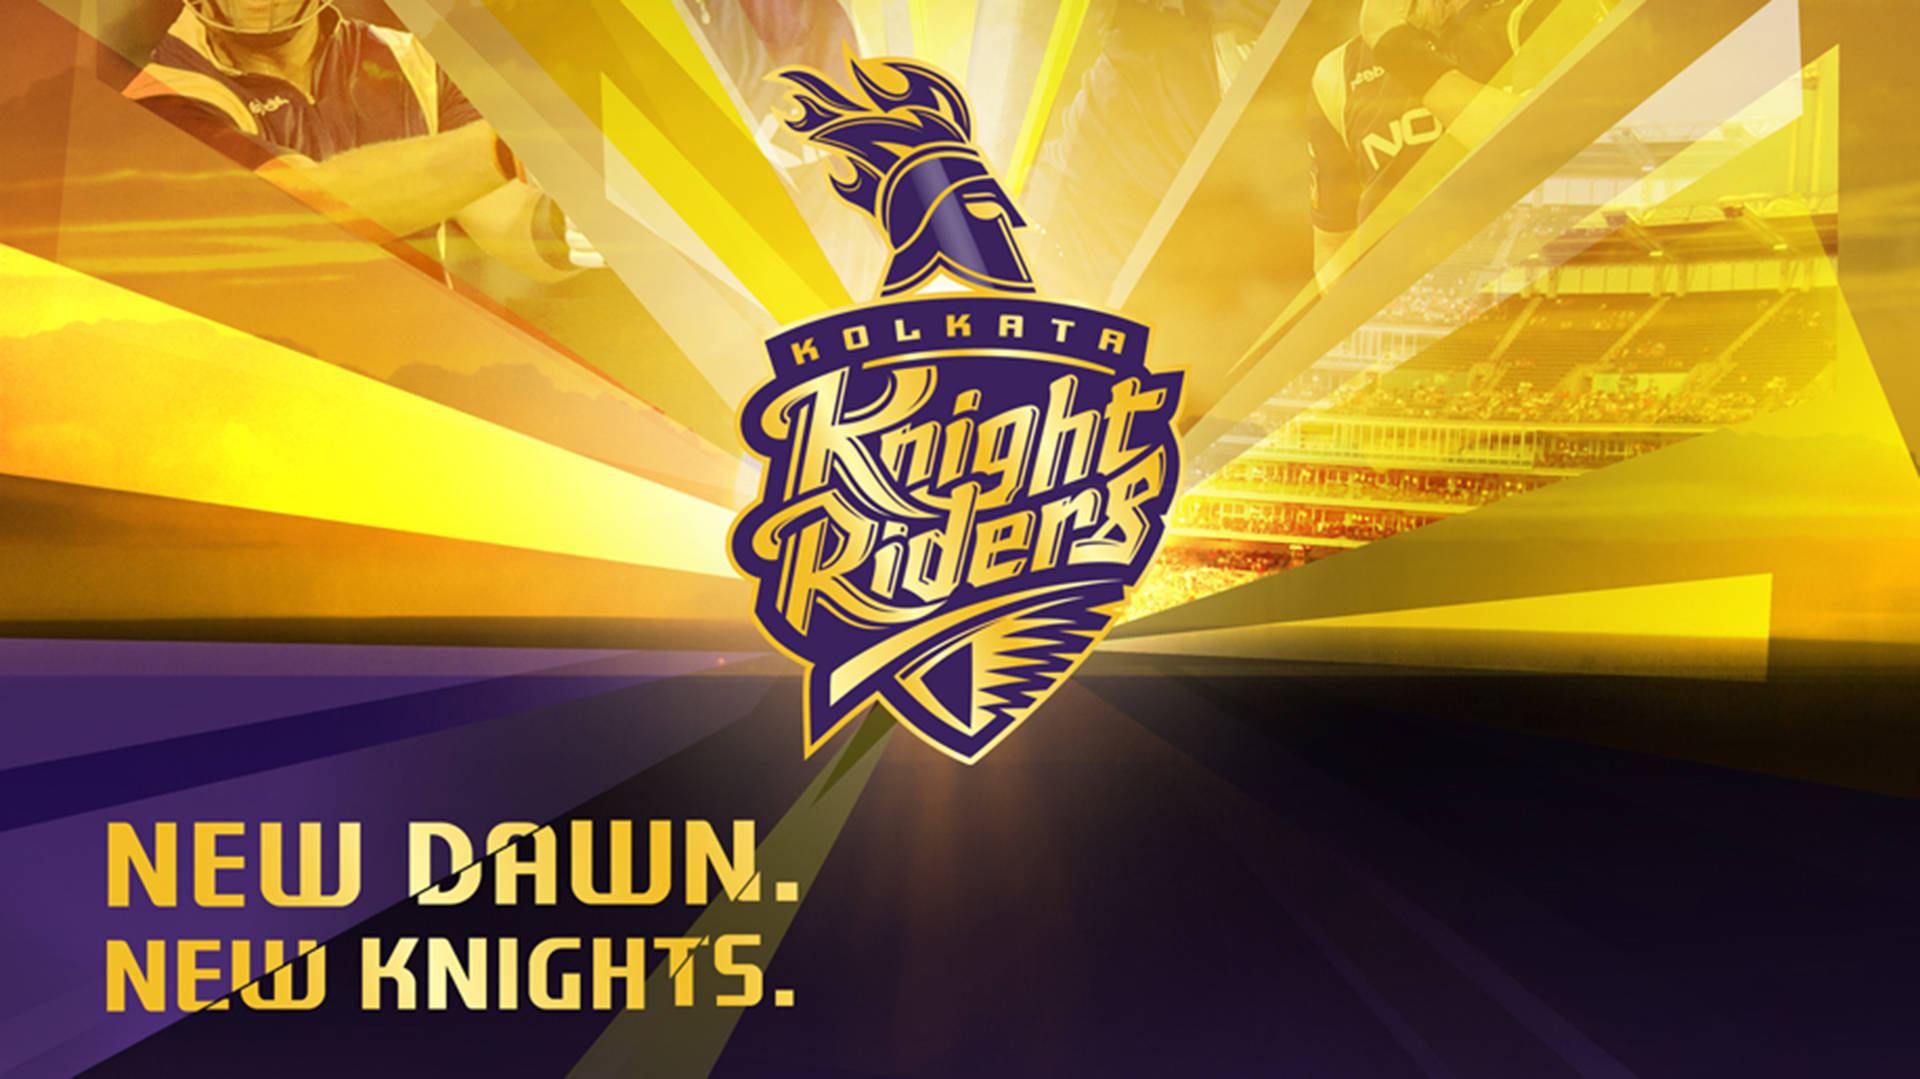 Kolkata Knight Riders Papel de Parede